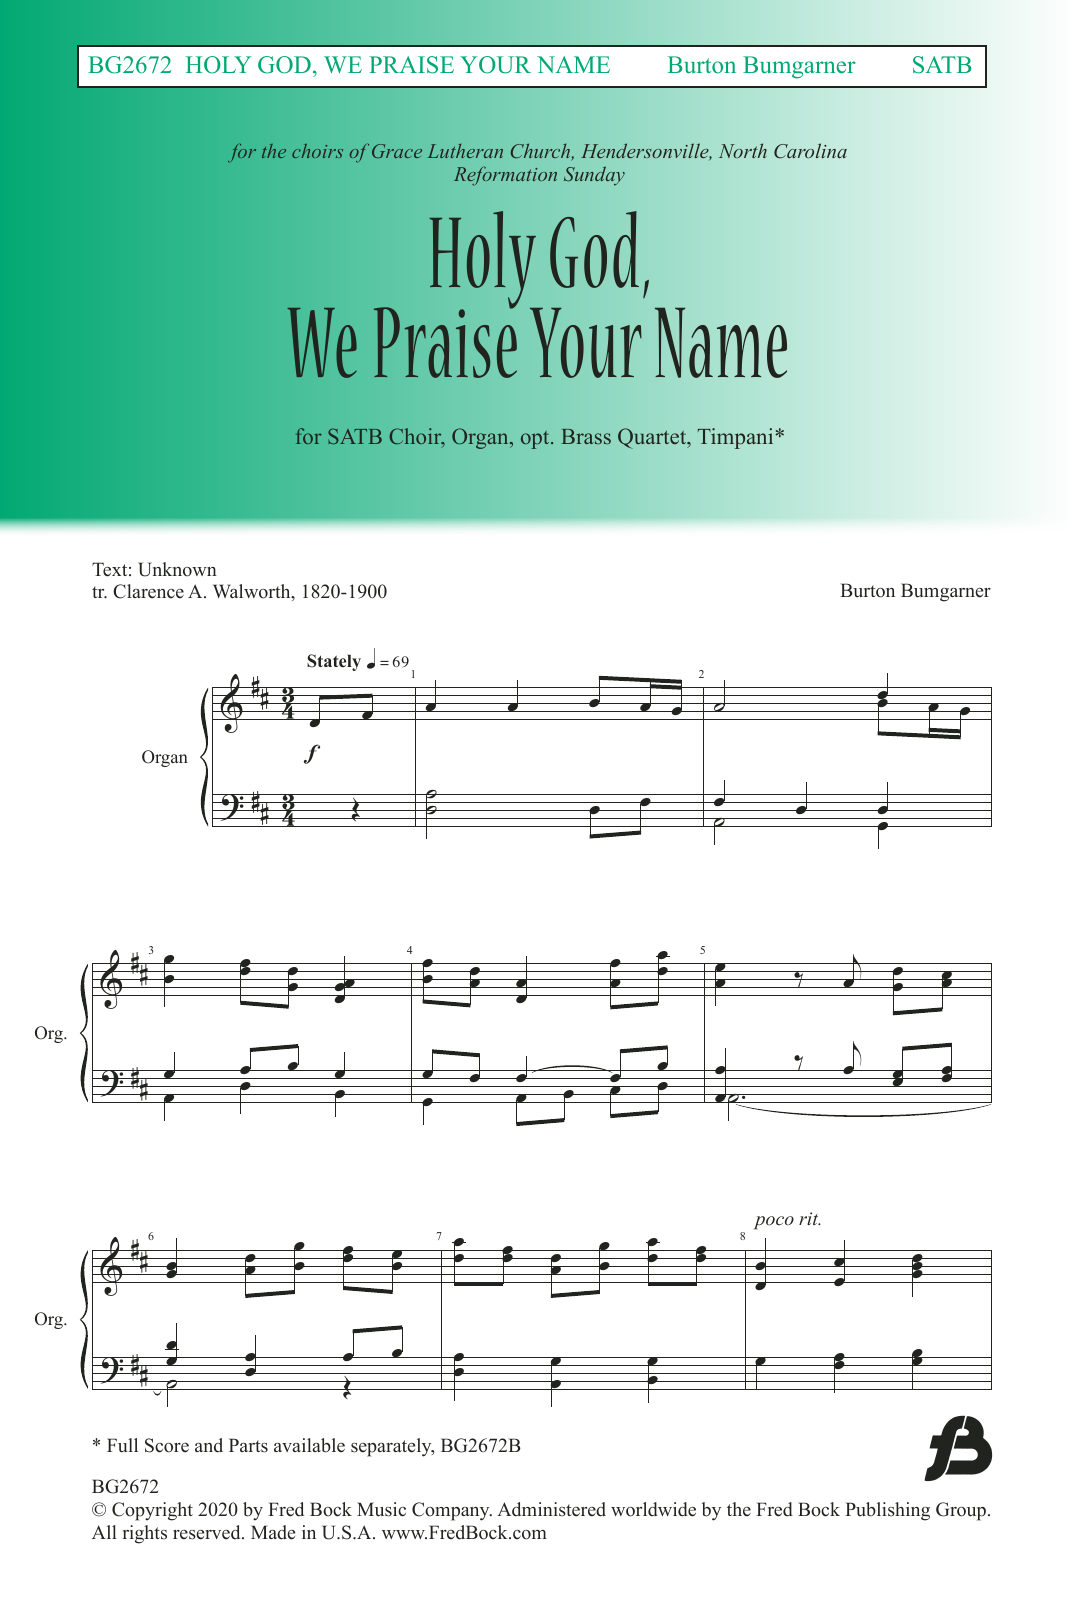 Burton Bumgarner Holy God We Praise Your Name Sheet Music Notes & Chords for SATB Choir - Download or Print PDF